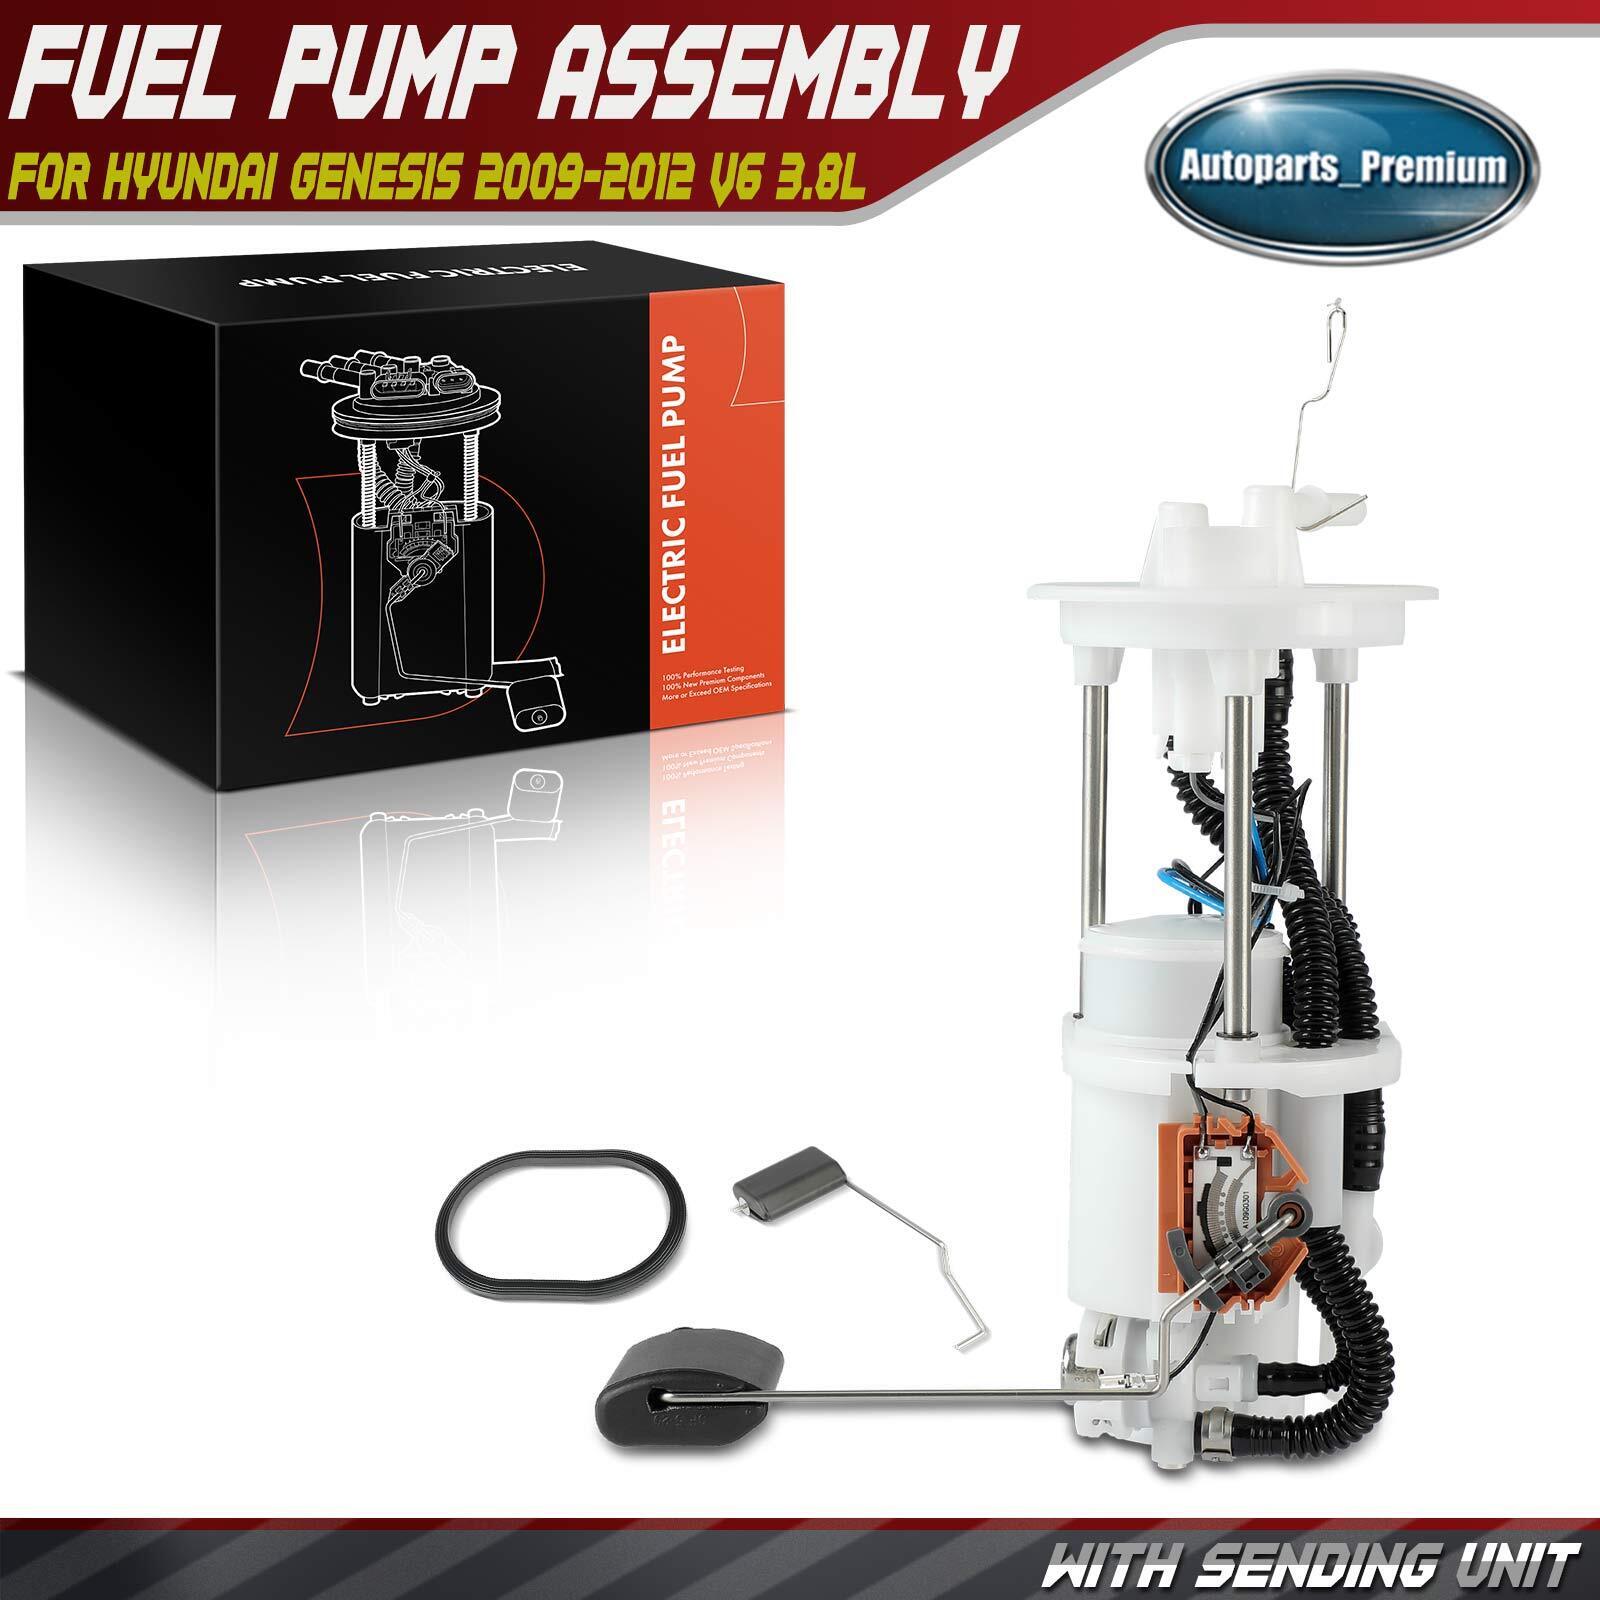 New Fuel Pump Module Assembly for Hyundai Genesis 2009 2010 2011-2012 V6 3.8L